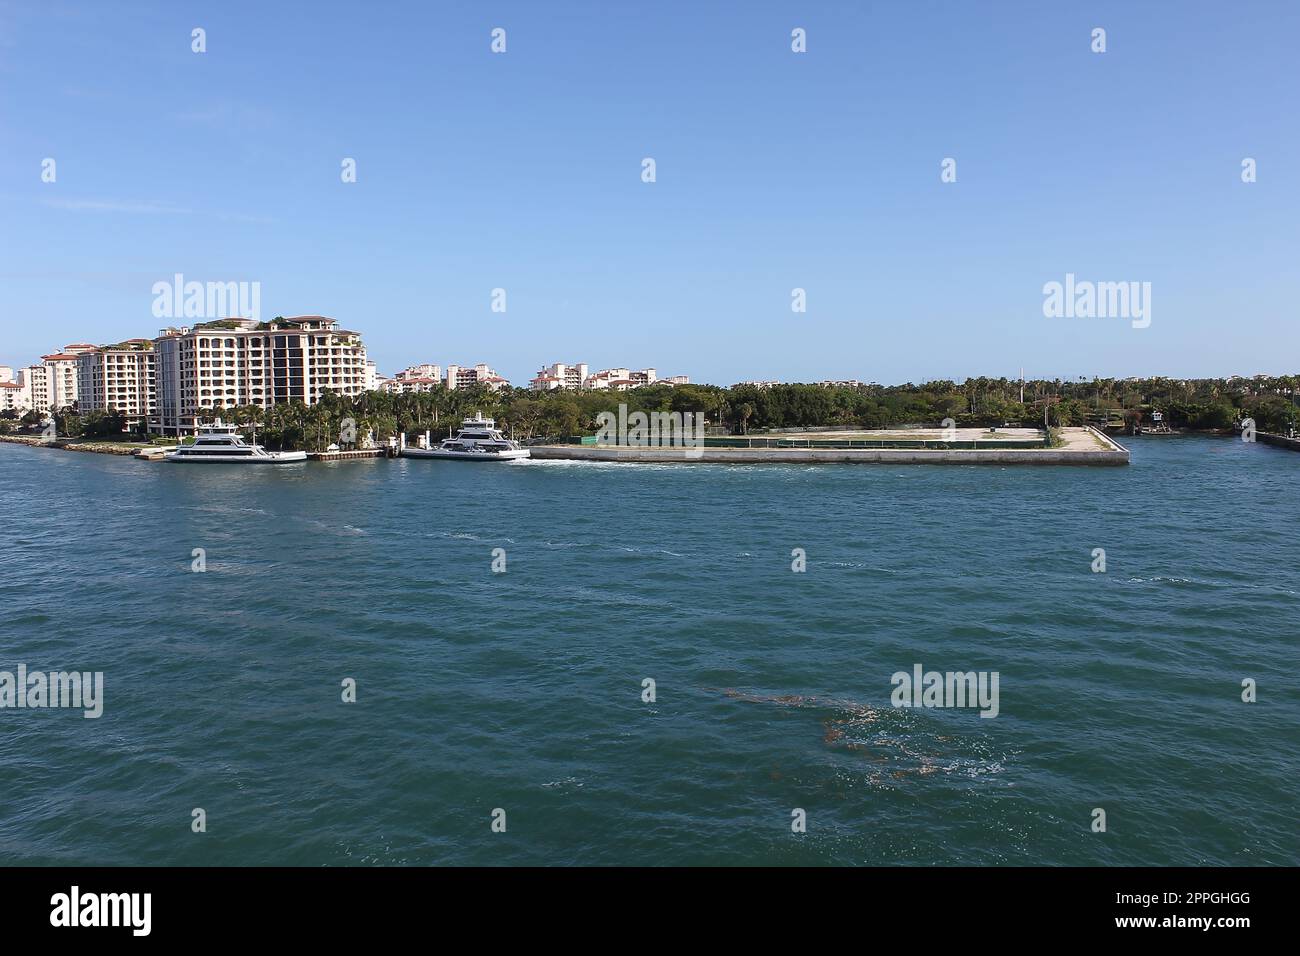 Luxury apartments in port of Miami Stock Photo